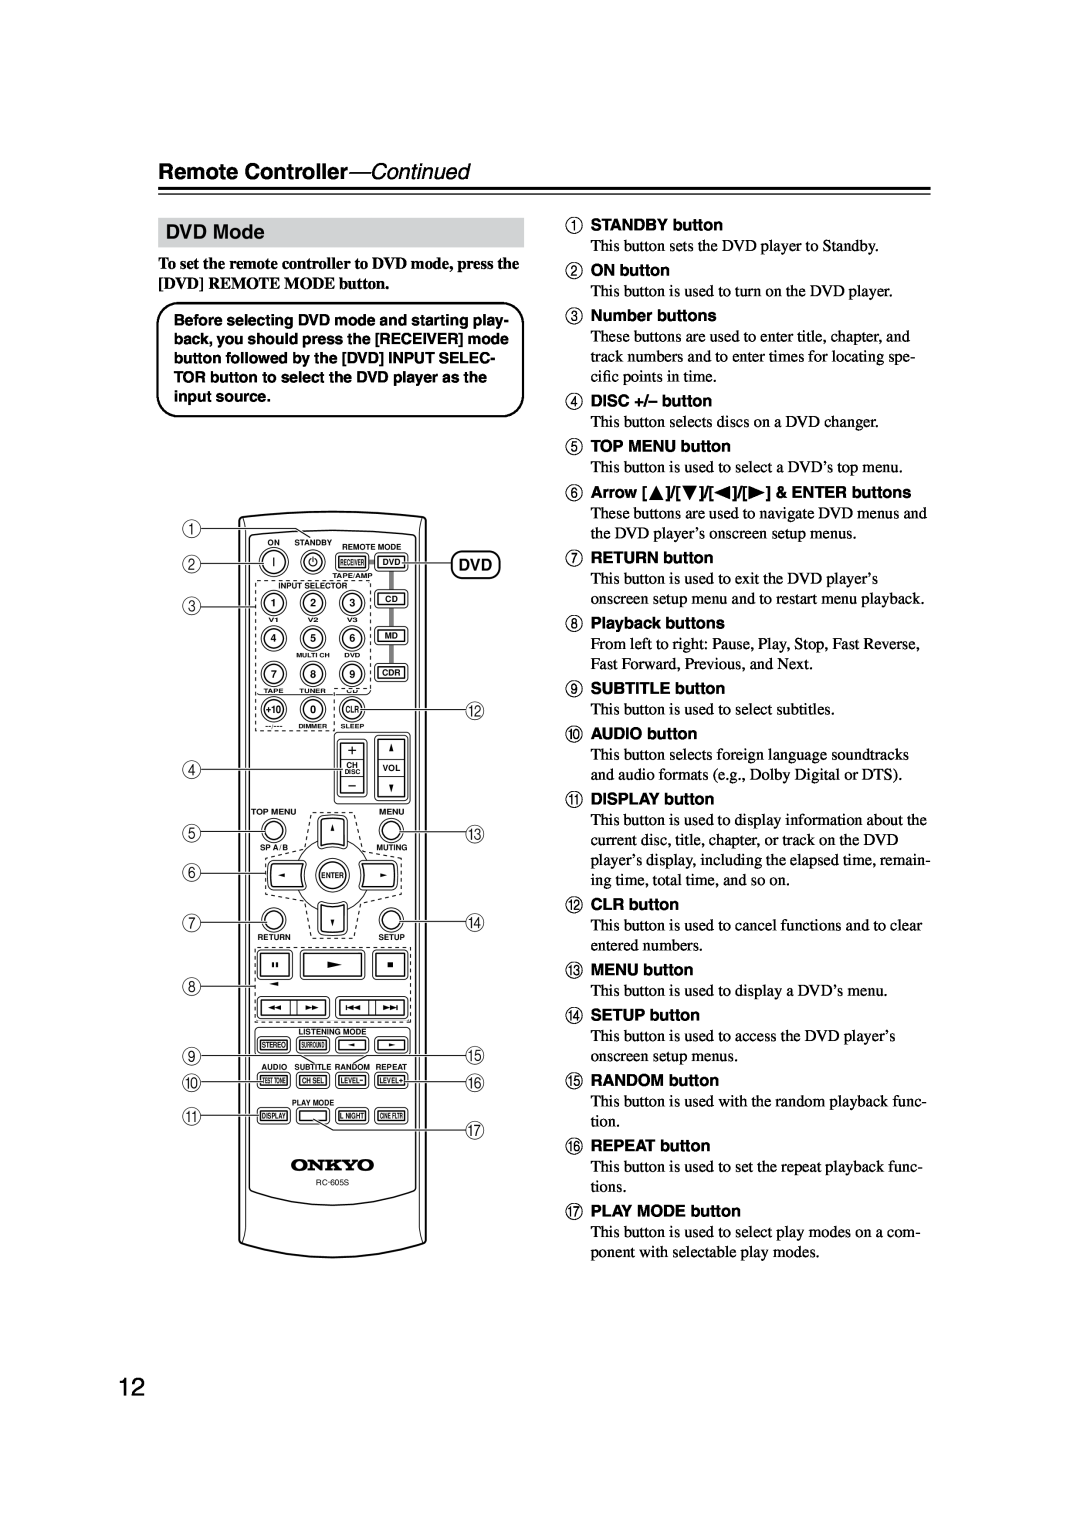 Onkyo TX-SR303E instruction manual DVD Mode, Remote Controller-Continued 